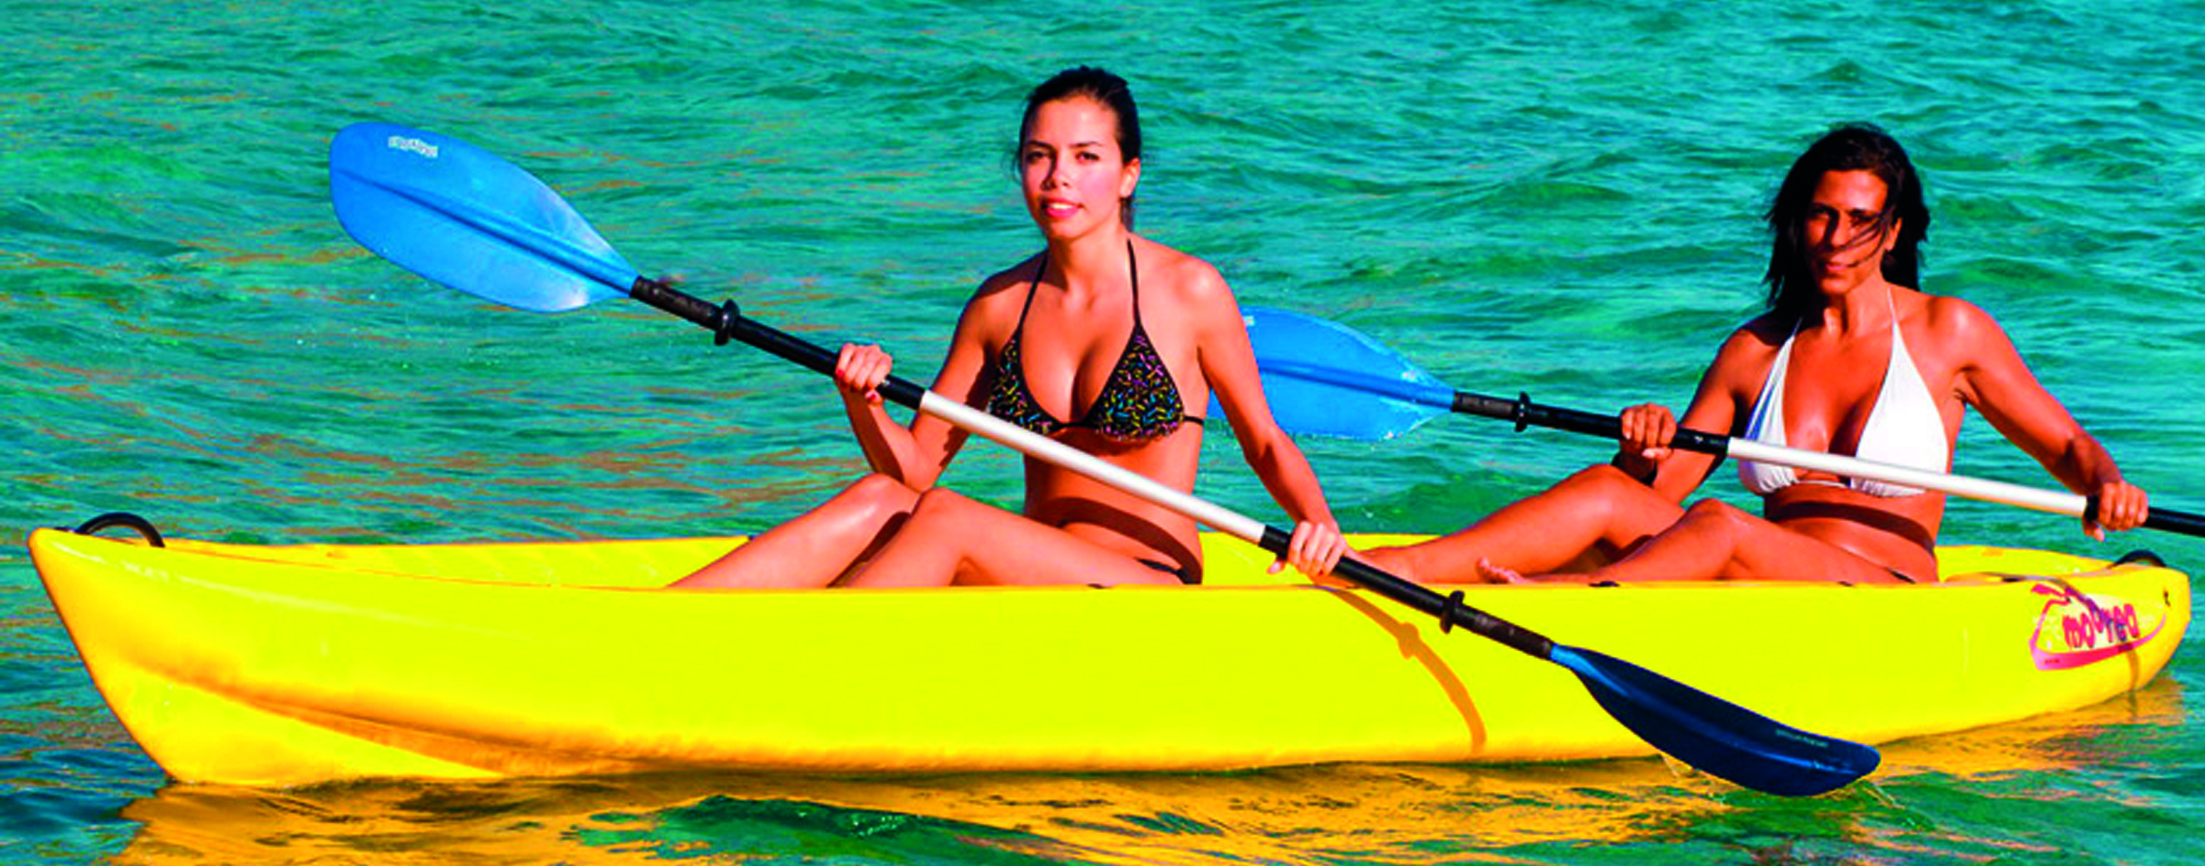 noleggio canoe water sport giulia andrea